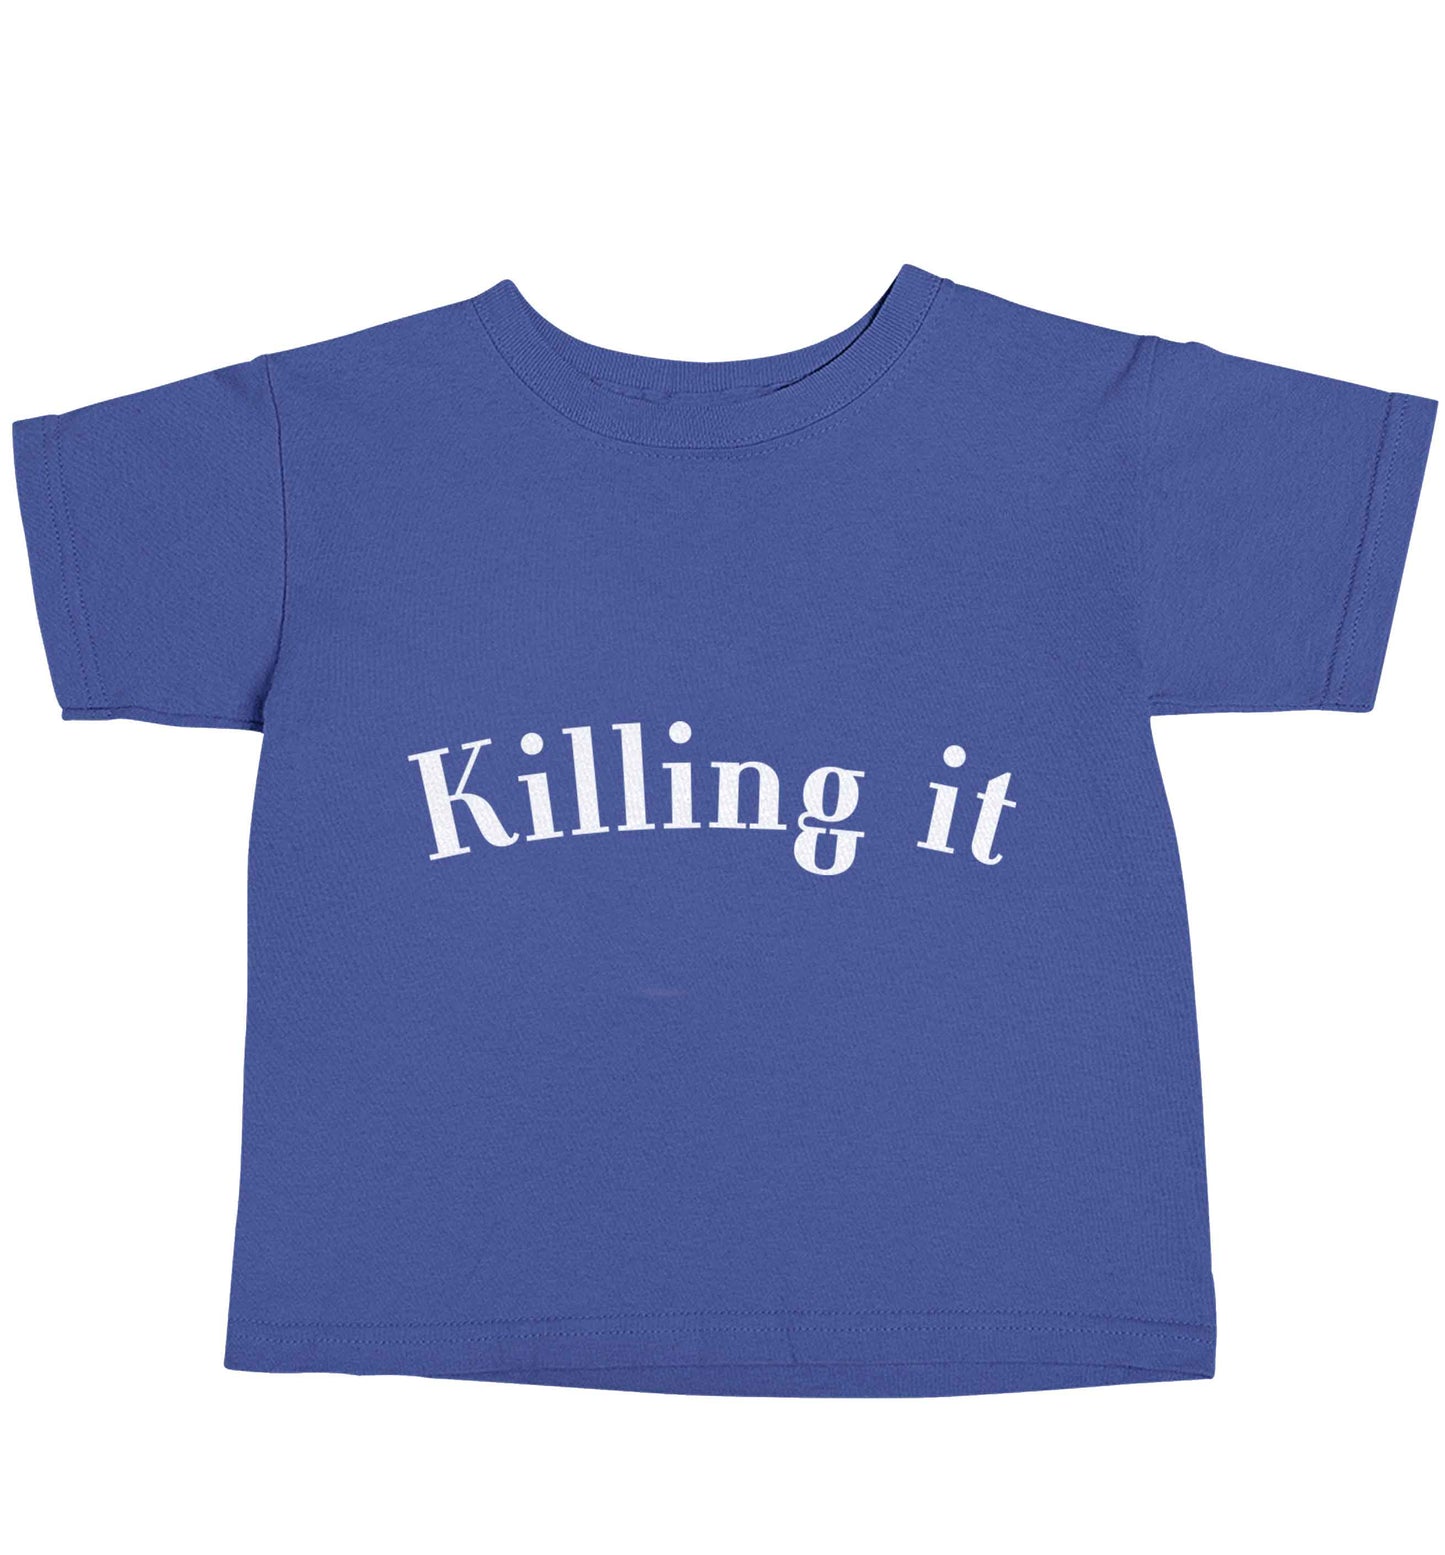 Killing it blue baby toddler Tshirt 2 Years